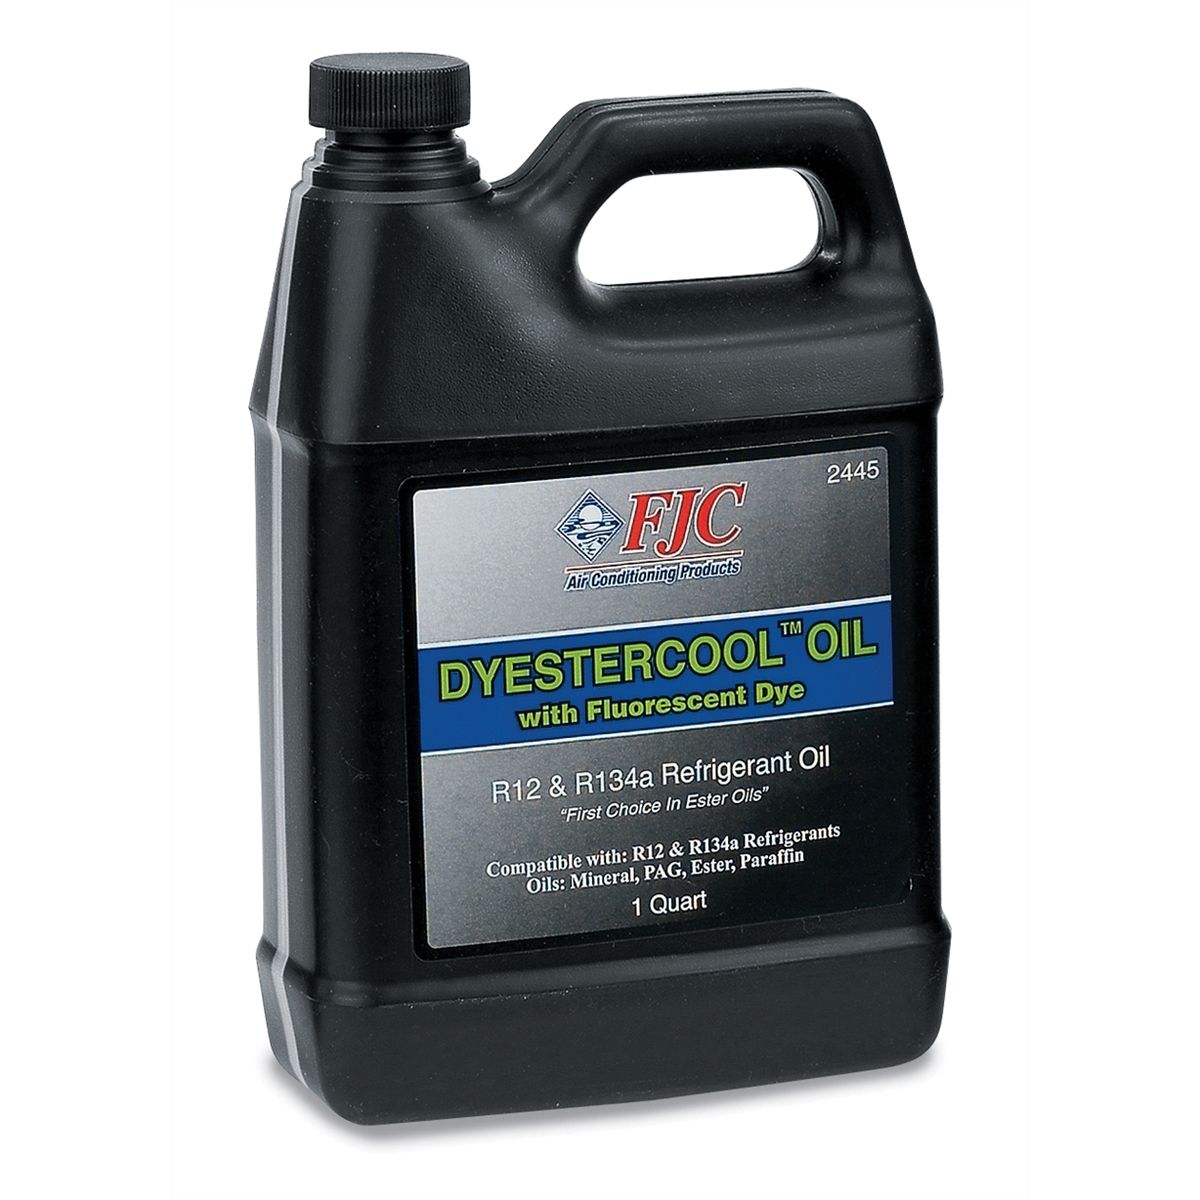 DyEstercool(TM) Oil